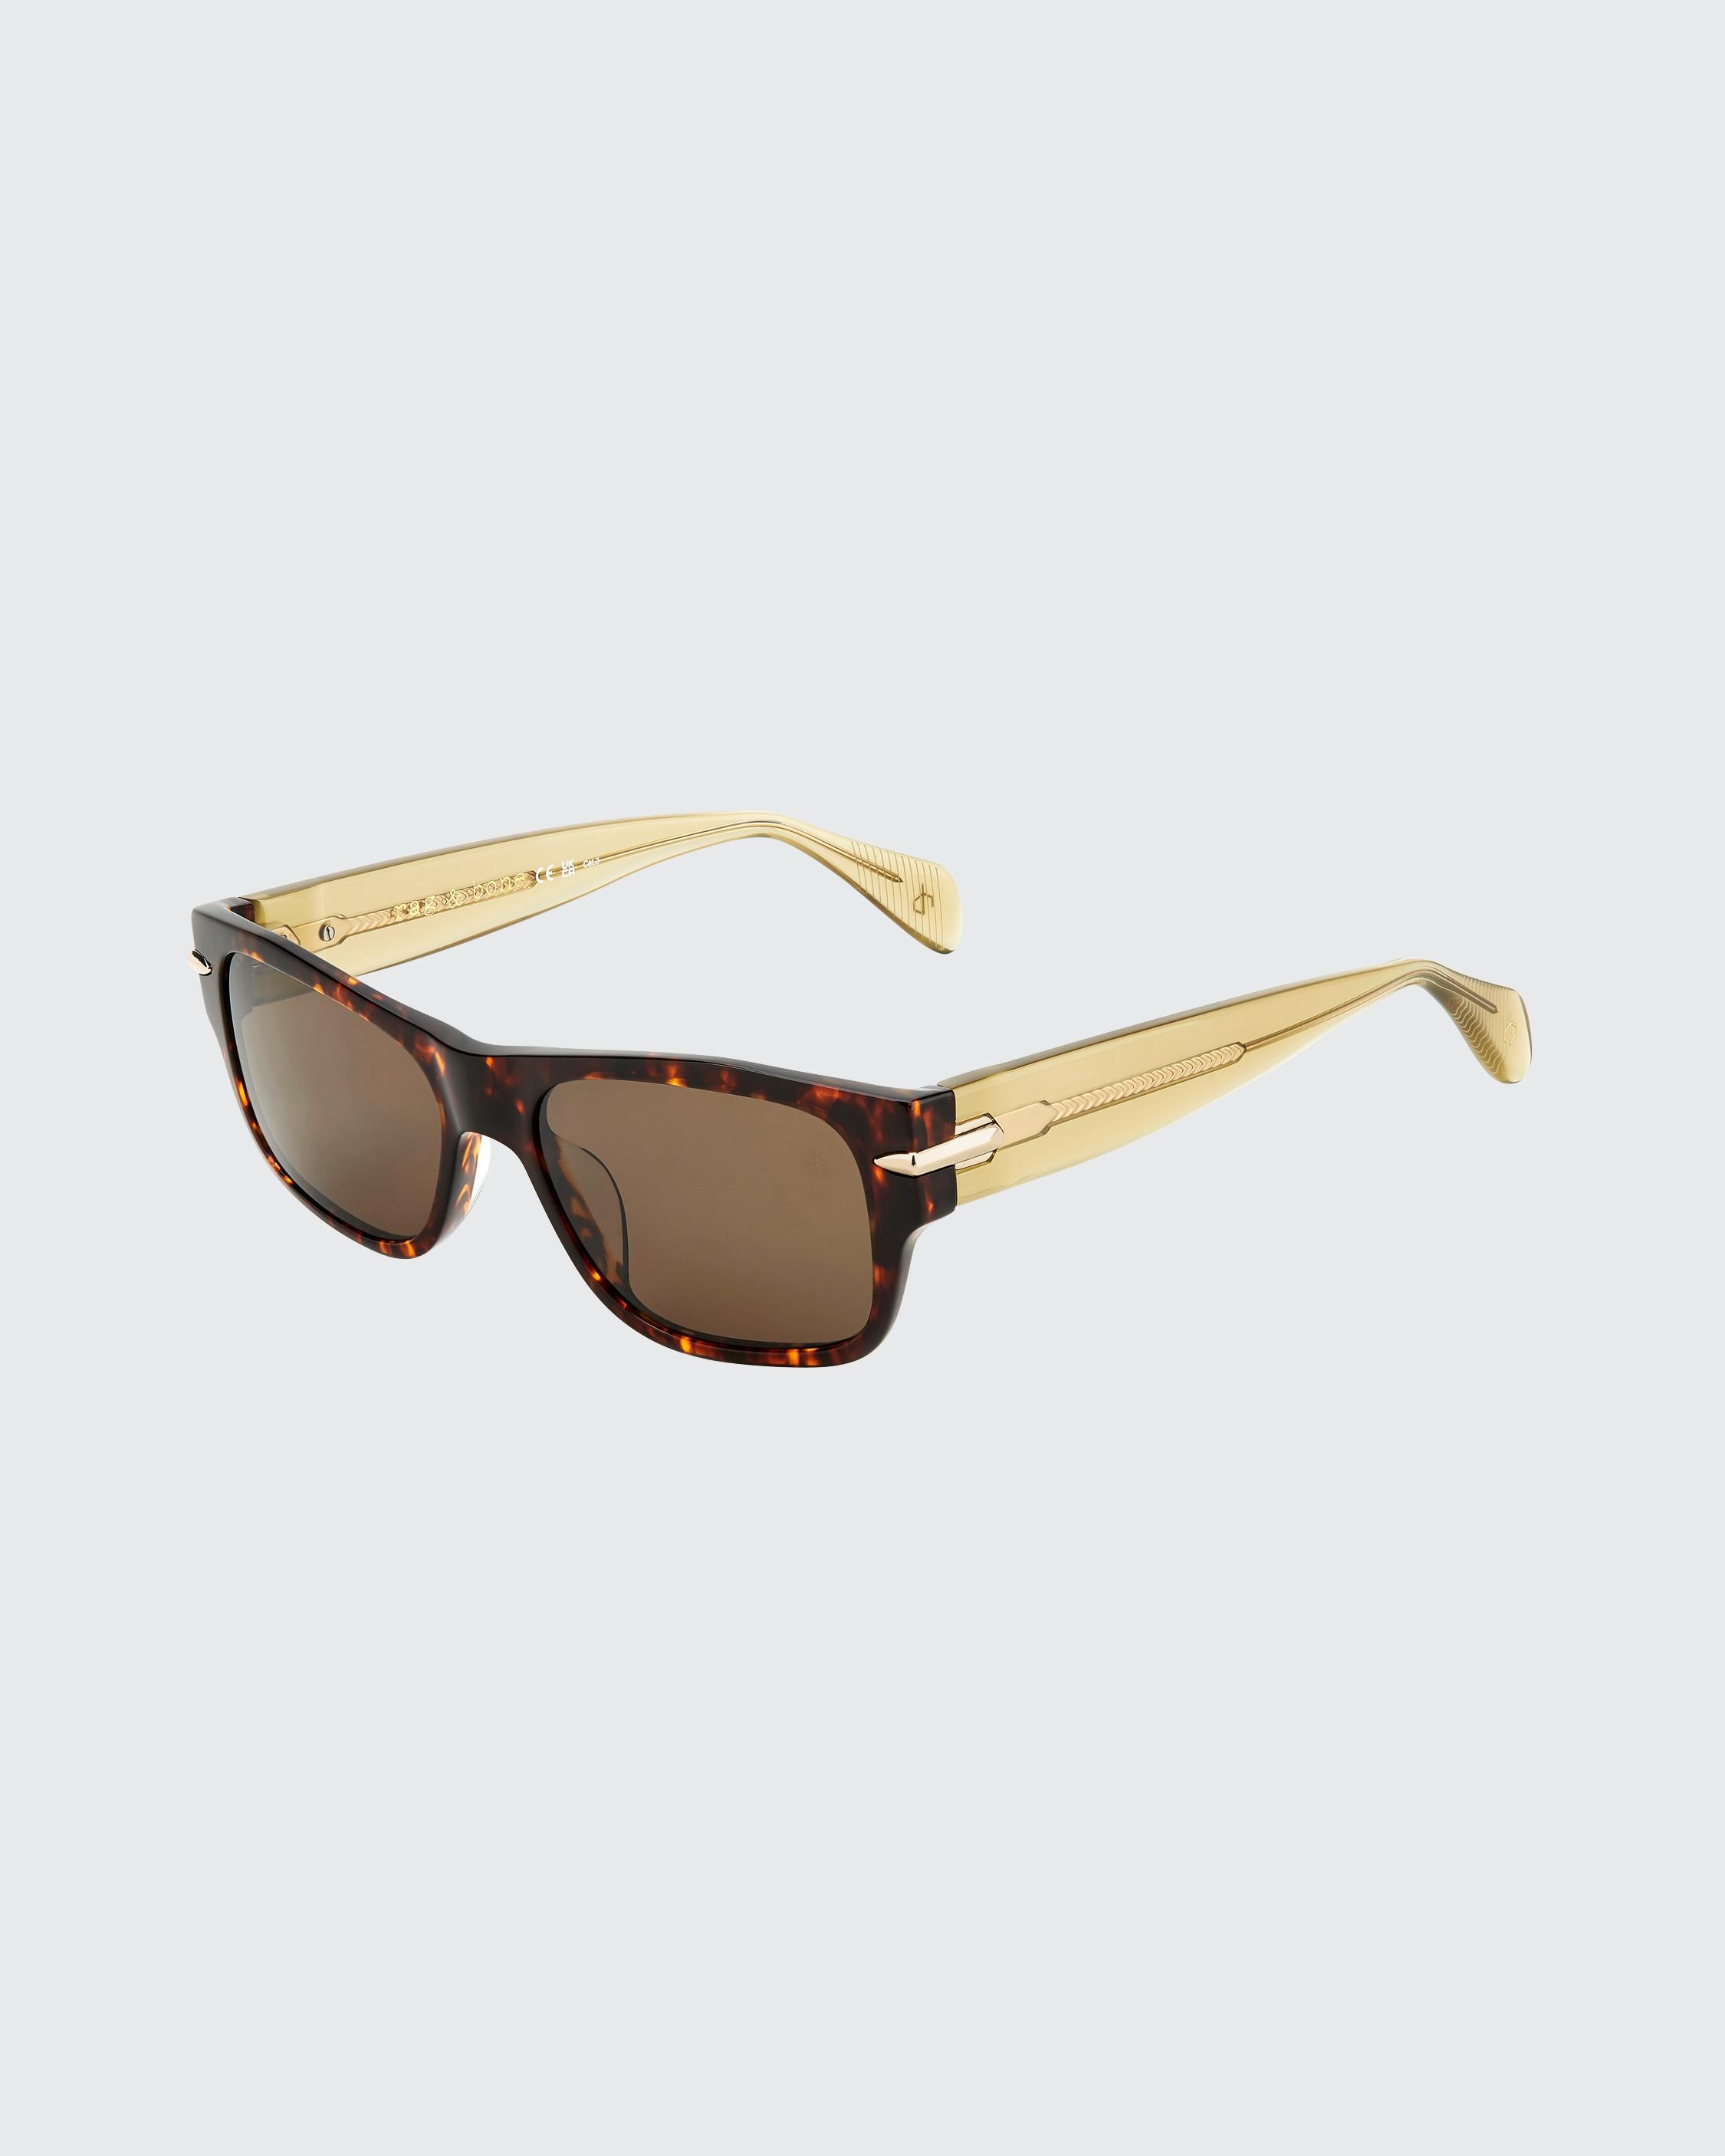 Fleetwood
Square Sunglasses - 1